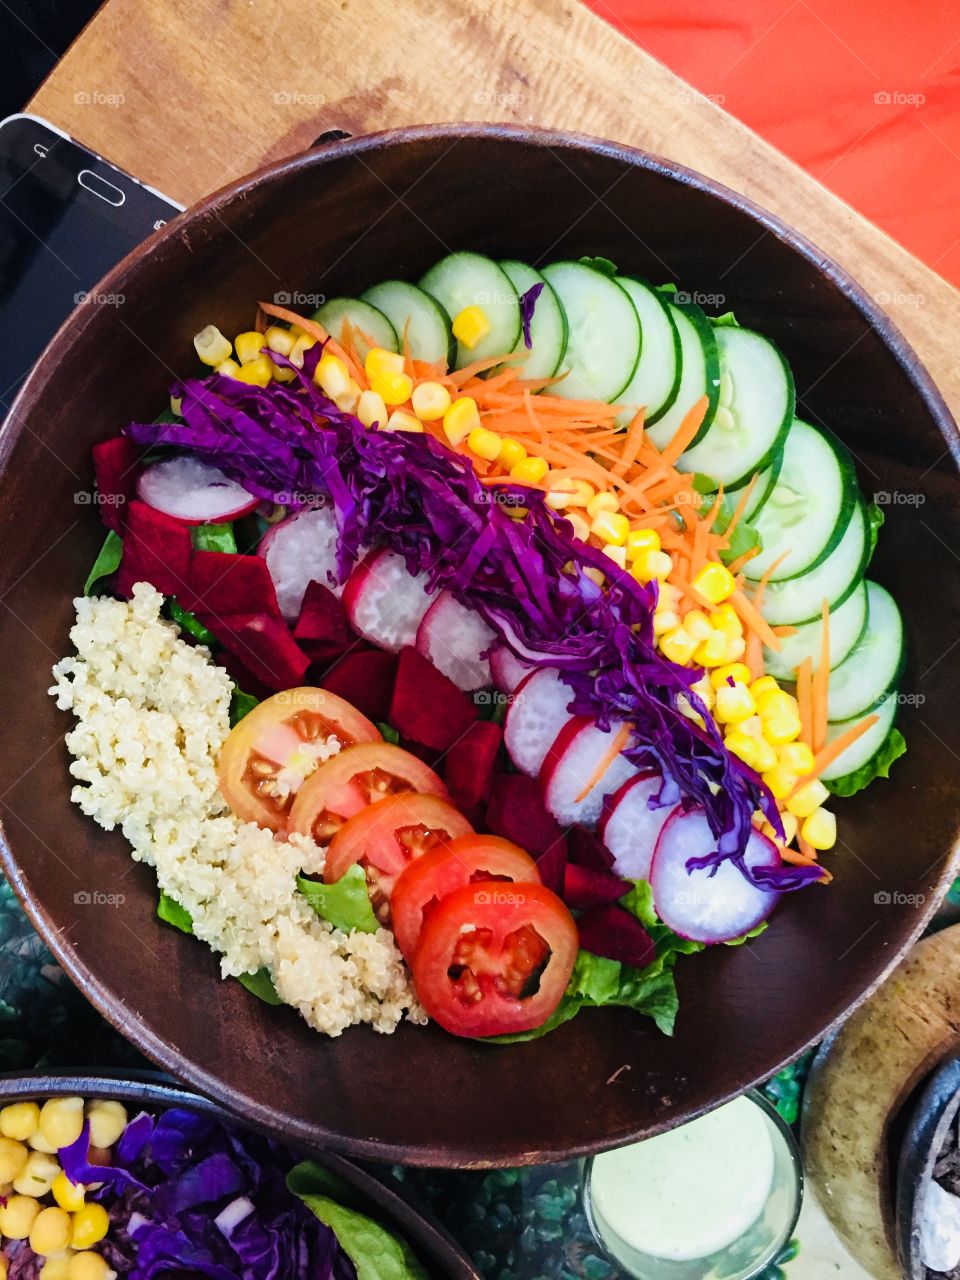 Rainbow quinoa salad with vegan ranch dressing 
@ Green Smoothie 